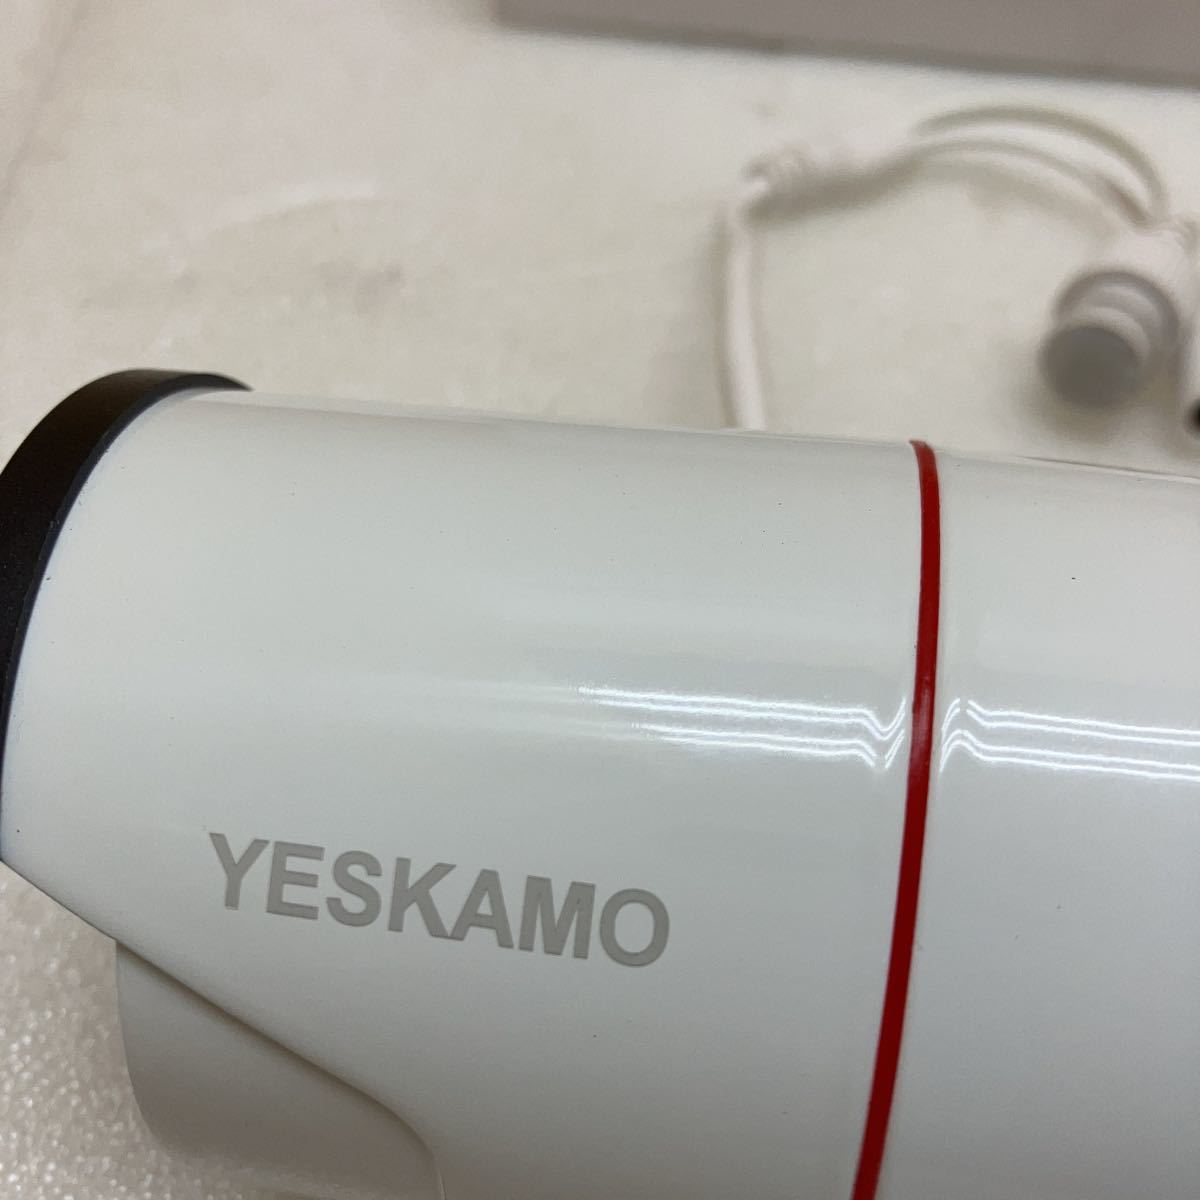 XL7282 YESKAMO NK02-3MP 防犯カメラ 屋外 ワイヤレス 300万画素 増設用 単独使用不可 ネットワークカメラ 監視カメラ_画像4